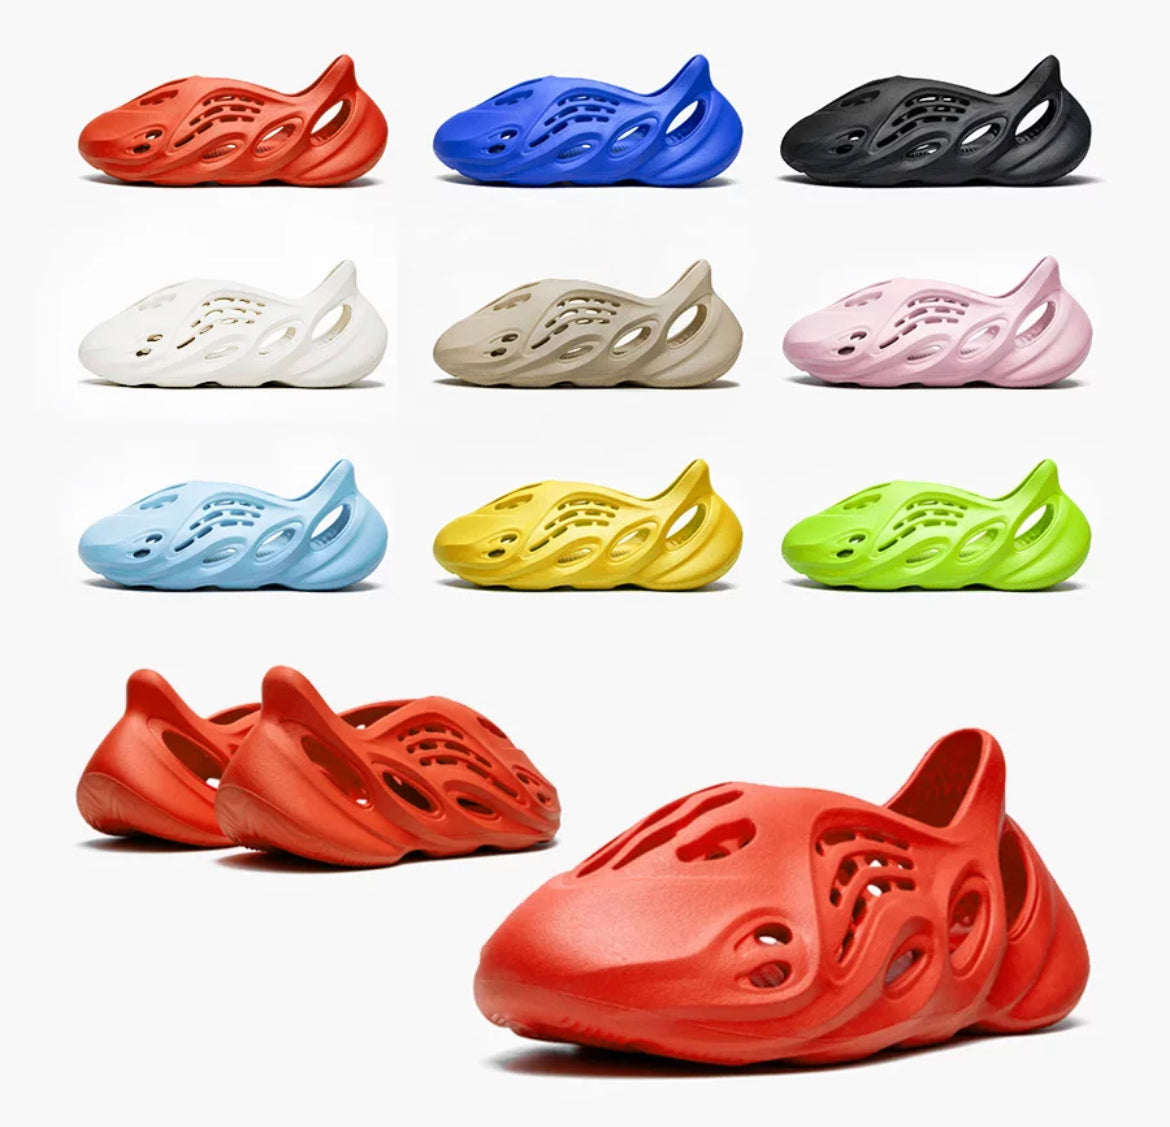 yeezy foam runner shoes